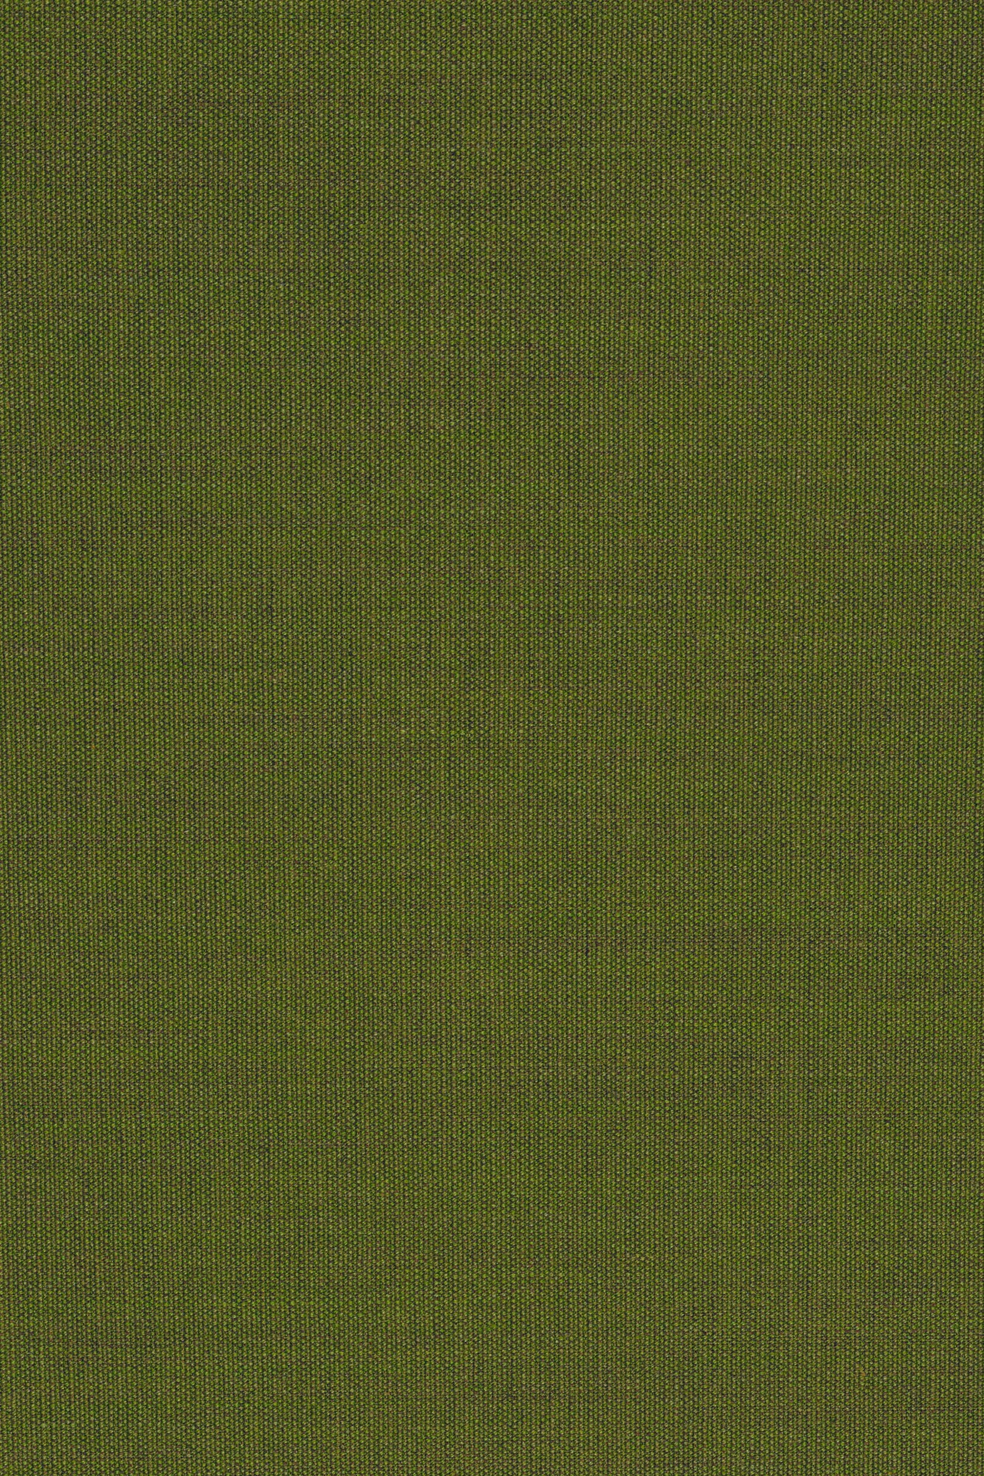 Fabric sample Canvas 2 954 green